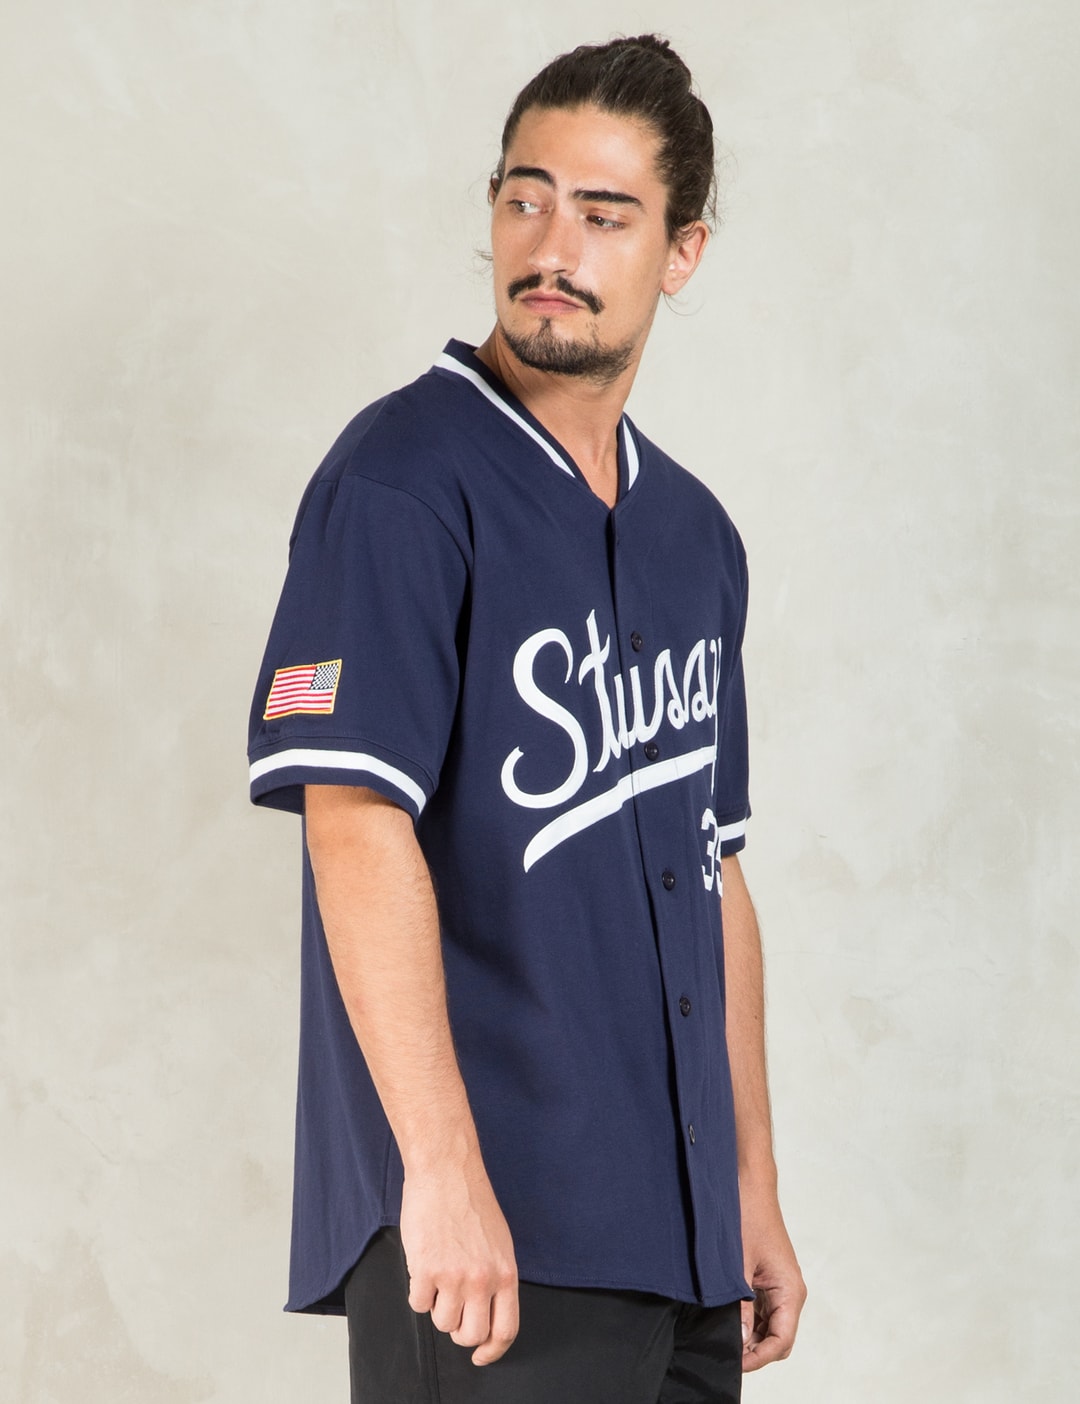 Stüssy - Navy Script Baseball Jersey | HBX - Globally Curated Fashion ...